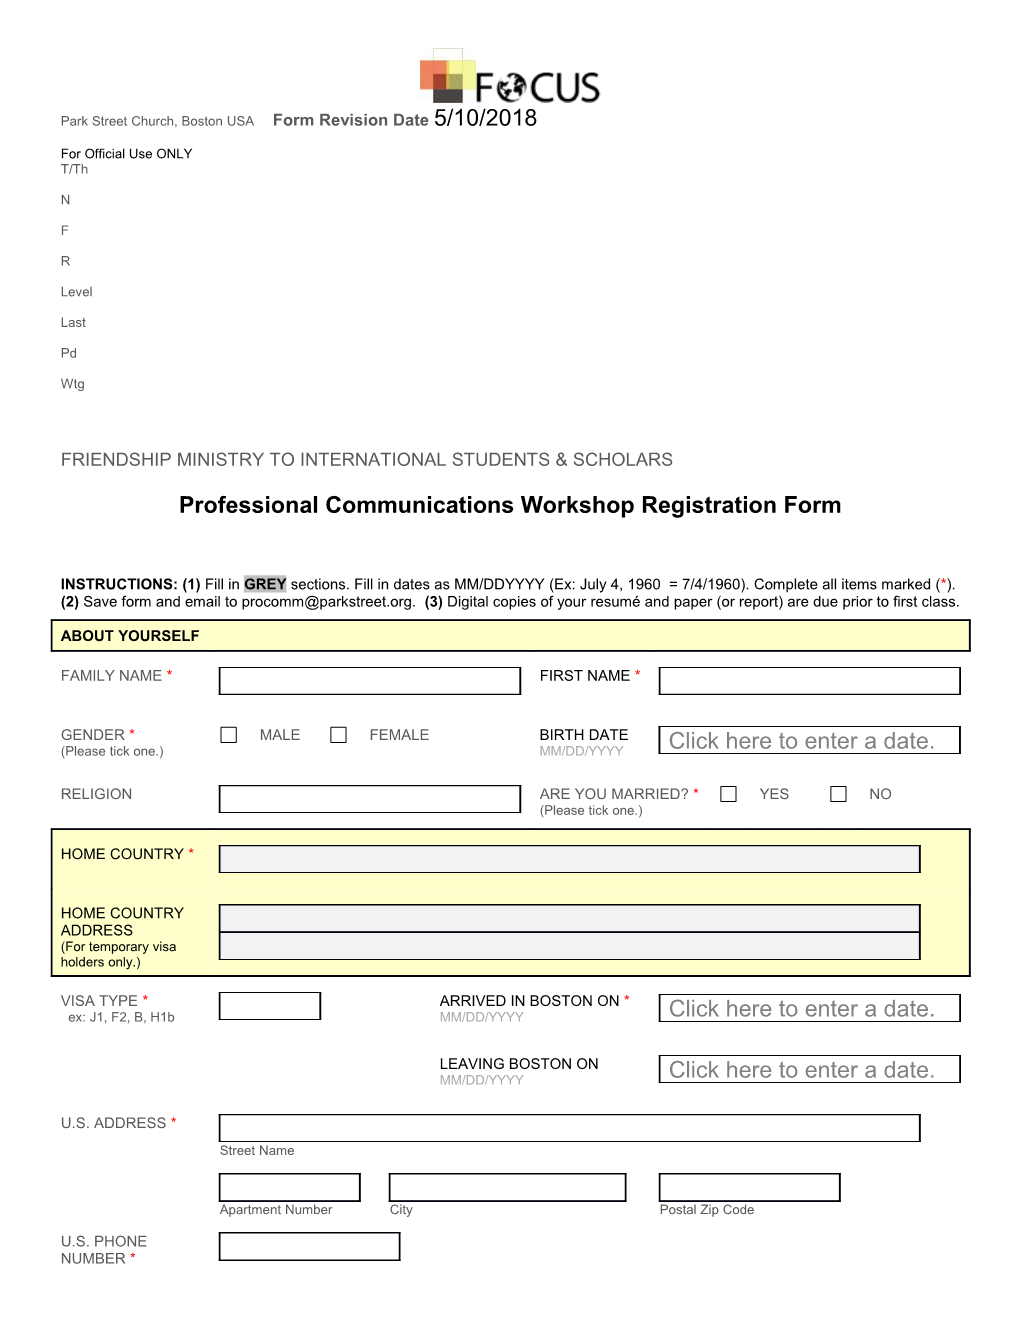 PCW Registration Form